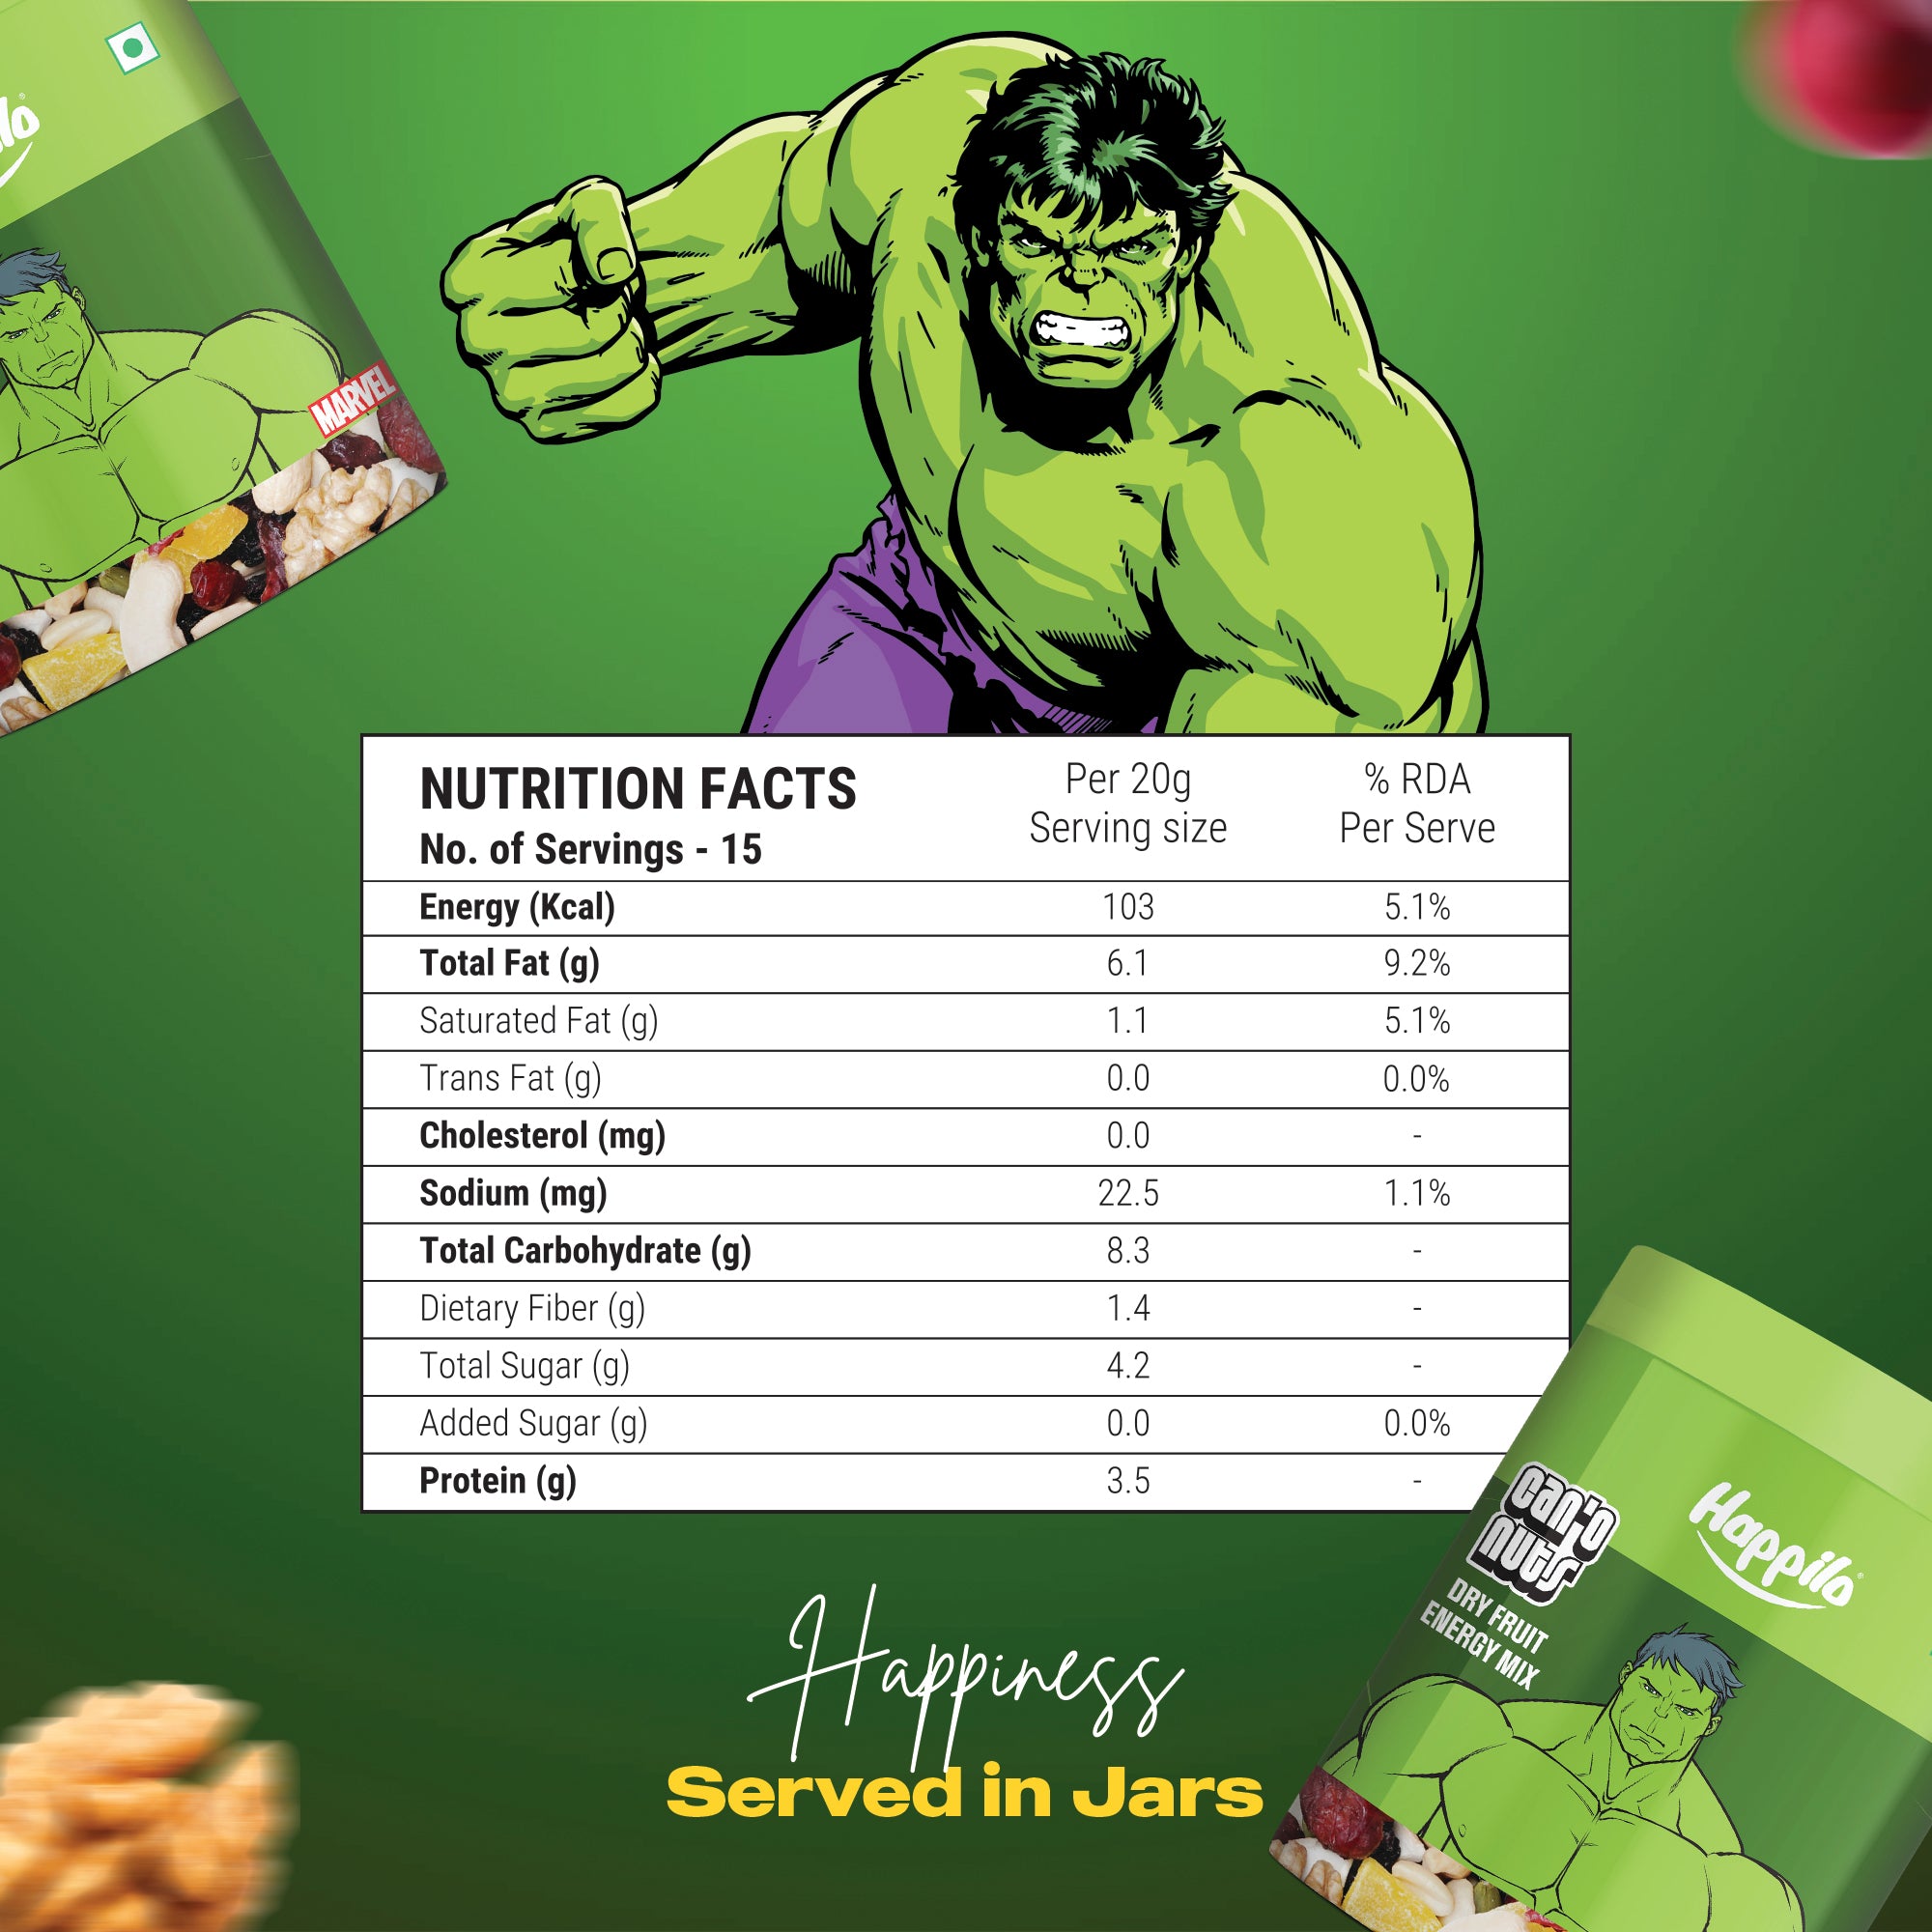 Hulk Edition Energy Dry Fruit Mix 300g